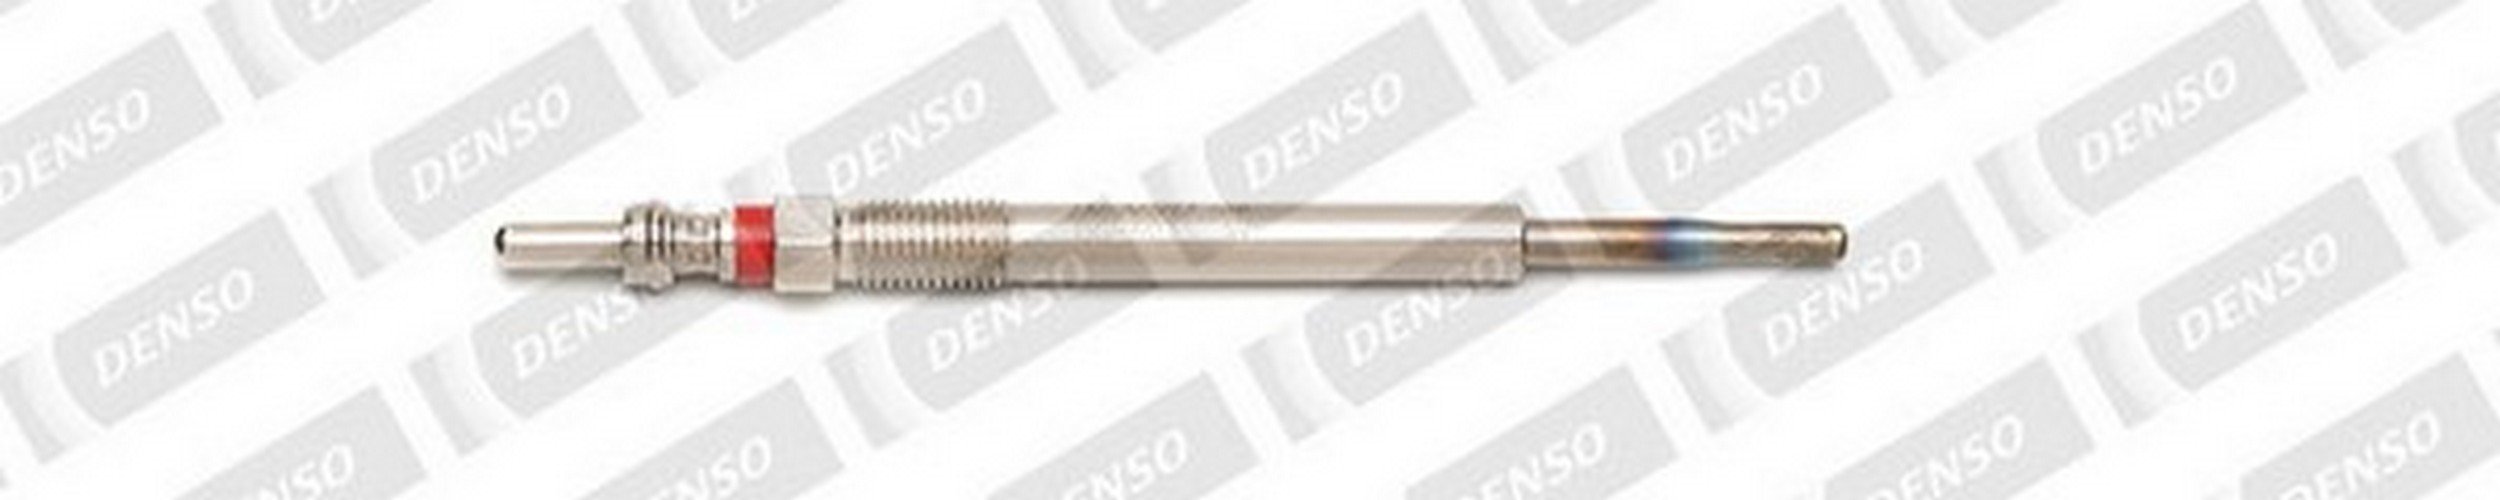 DENSO-AU DG-603